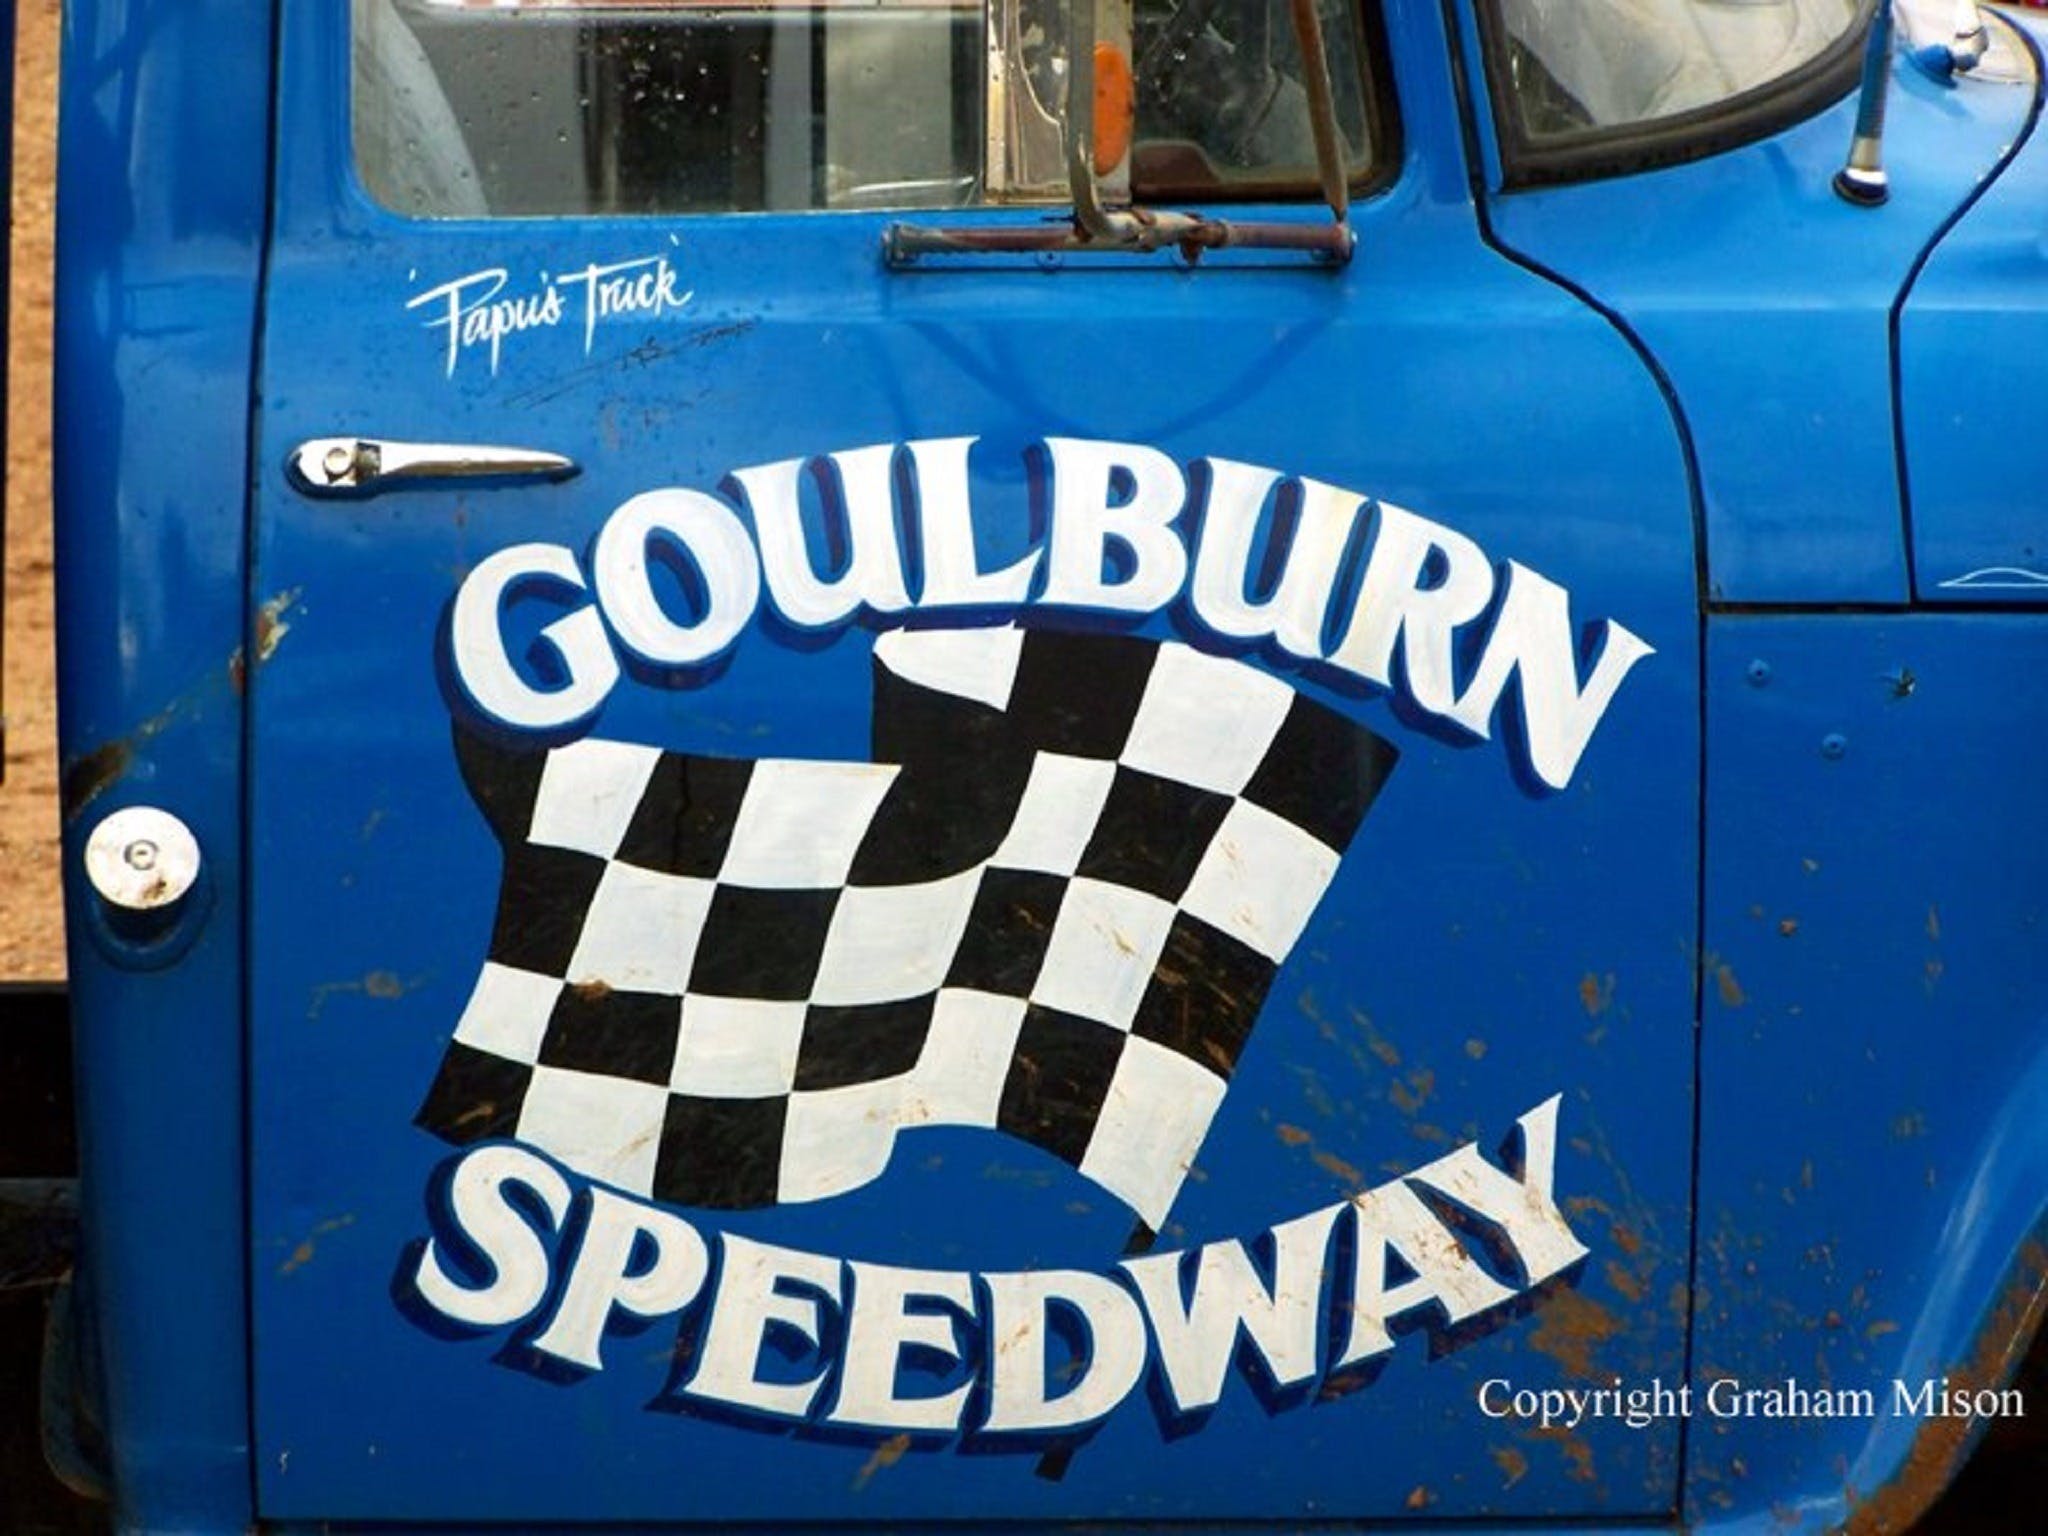 50 years of racing at Goulburn Speedway